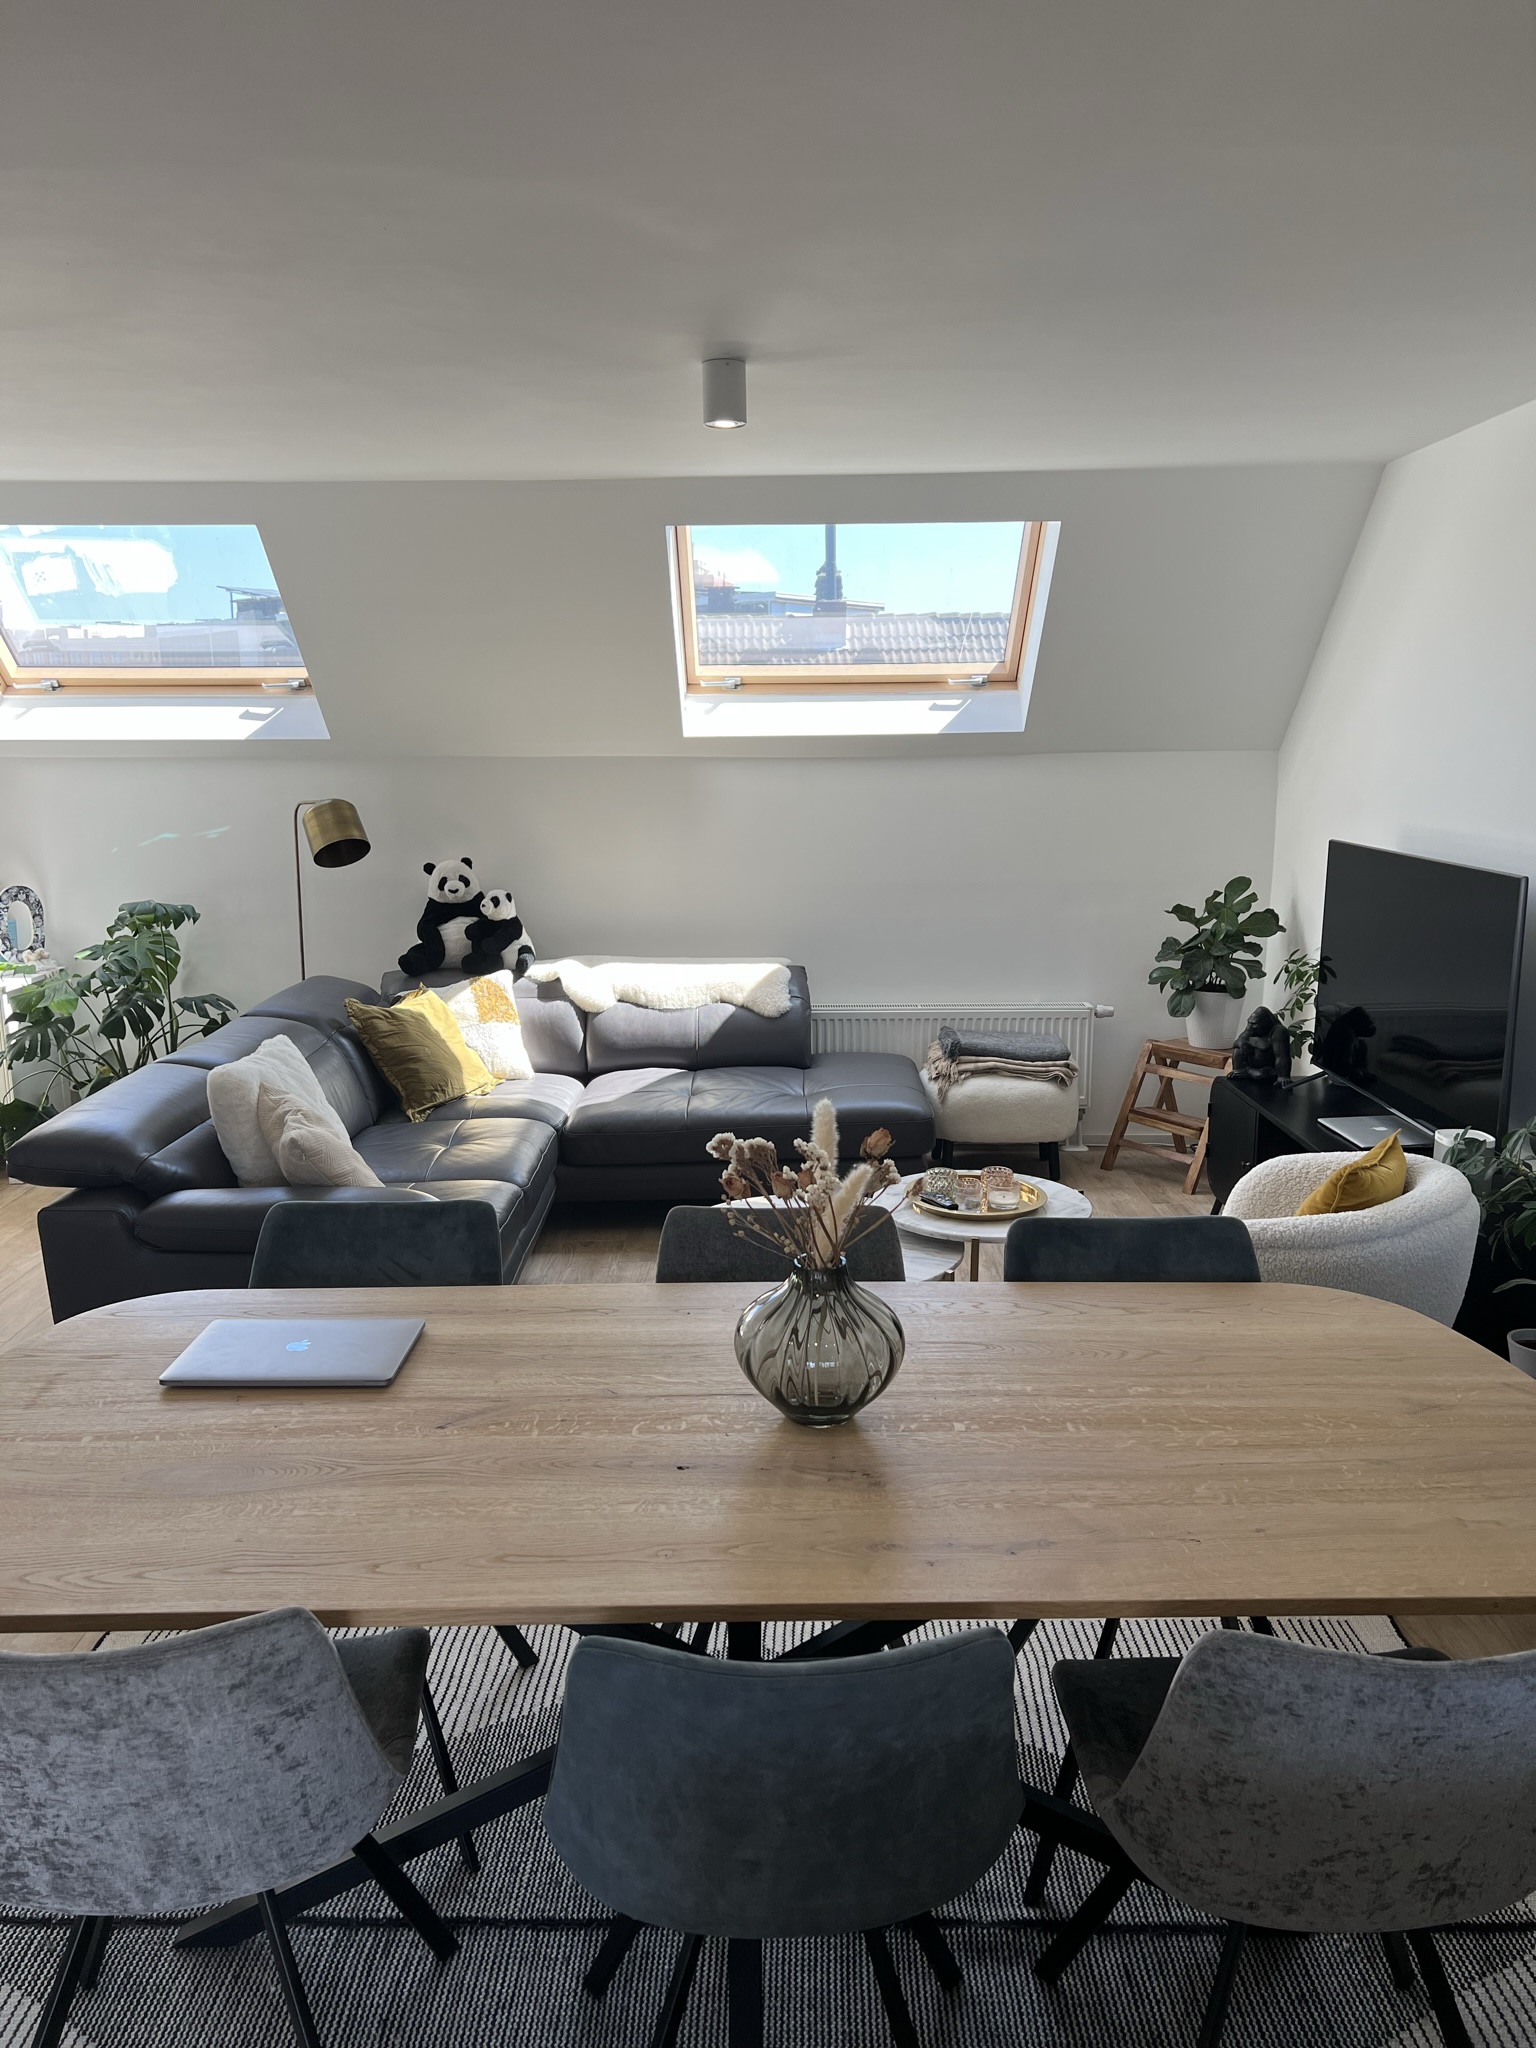 Egmont 2 - Luxury apartment for rent in Antwerp